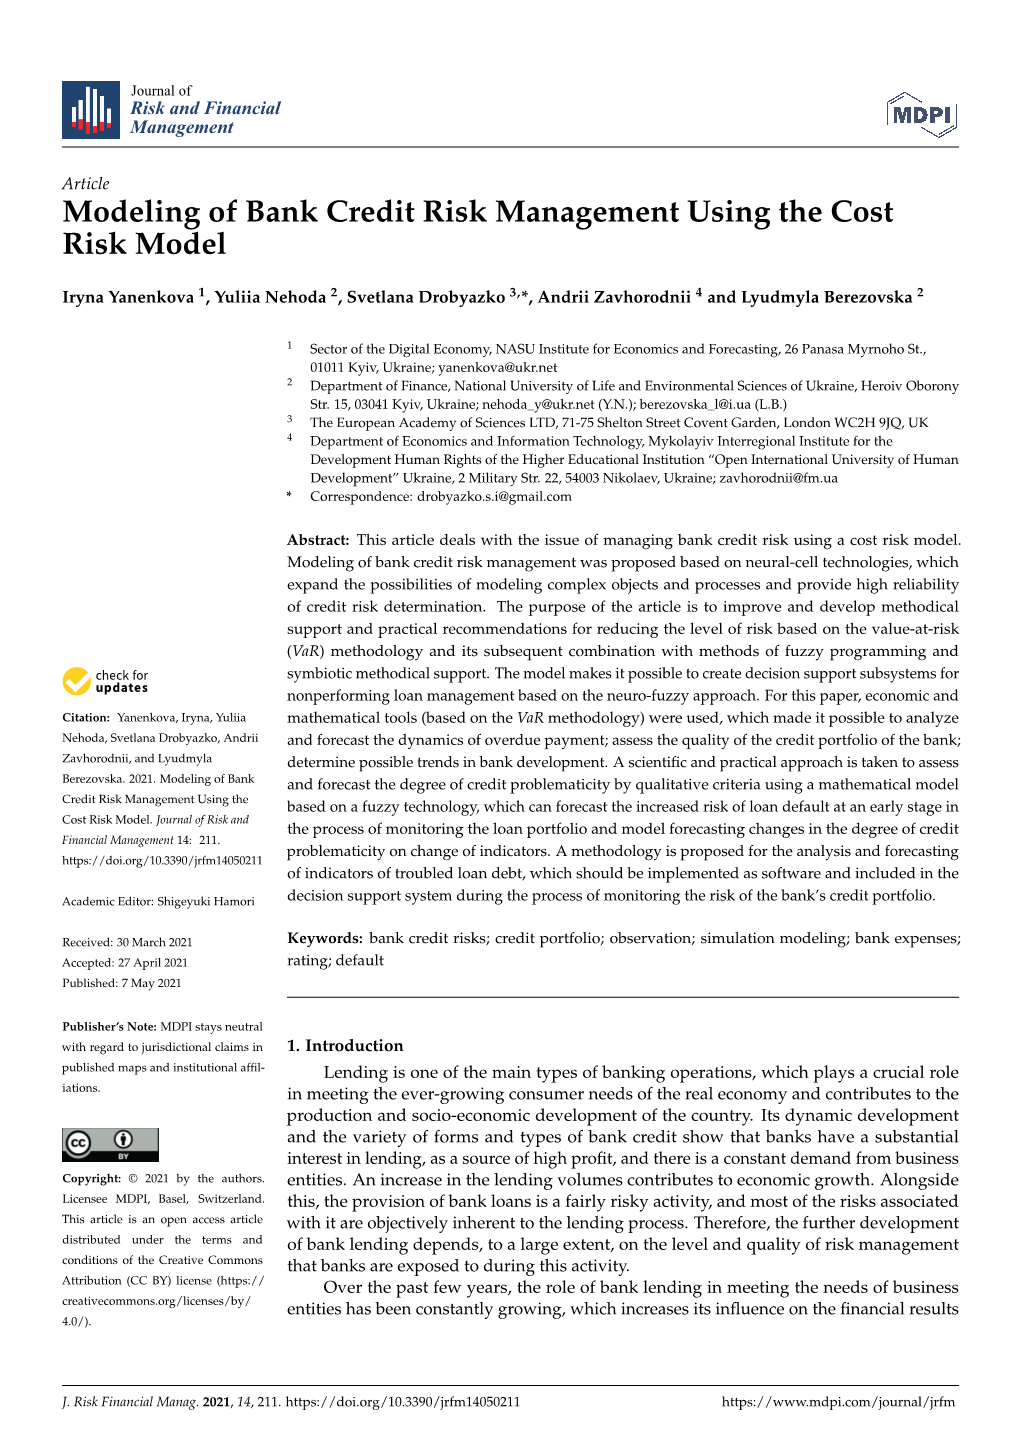 Modeling of Bank Credit Risk Management Using the Cost Risk Model